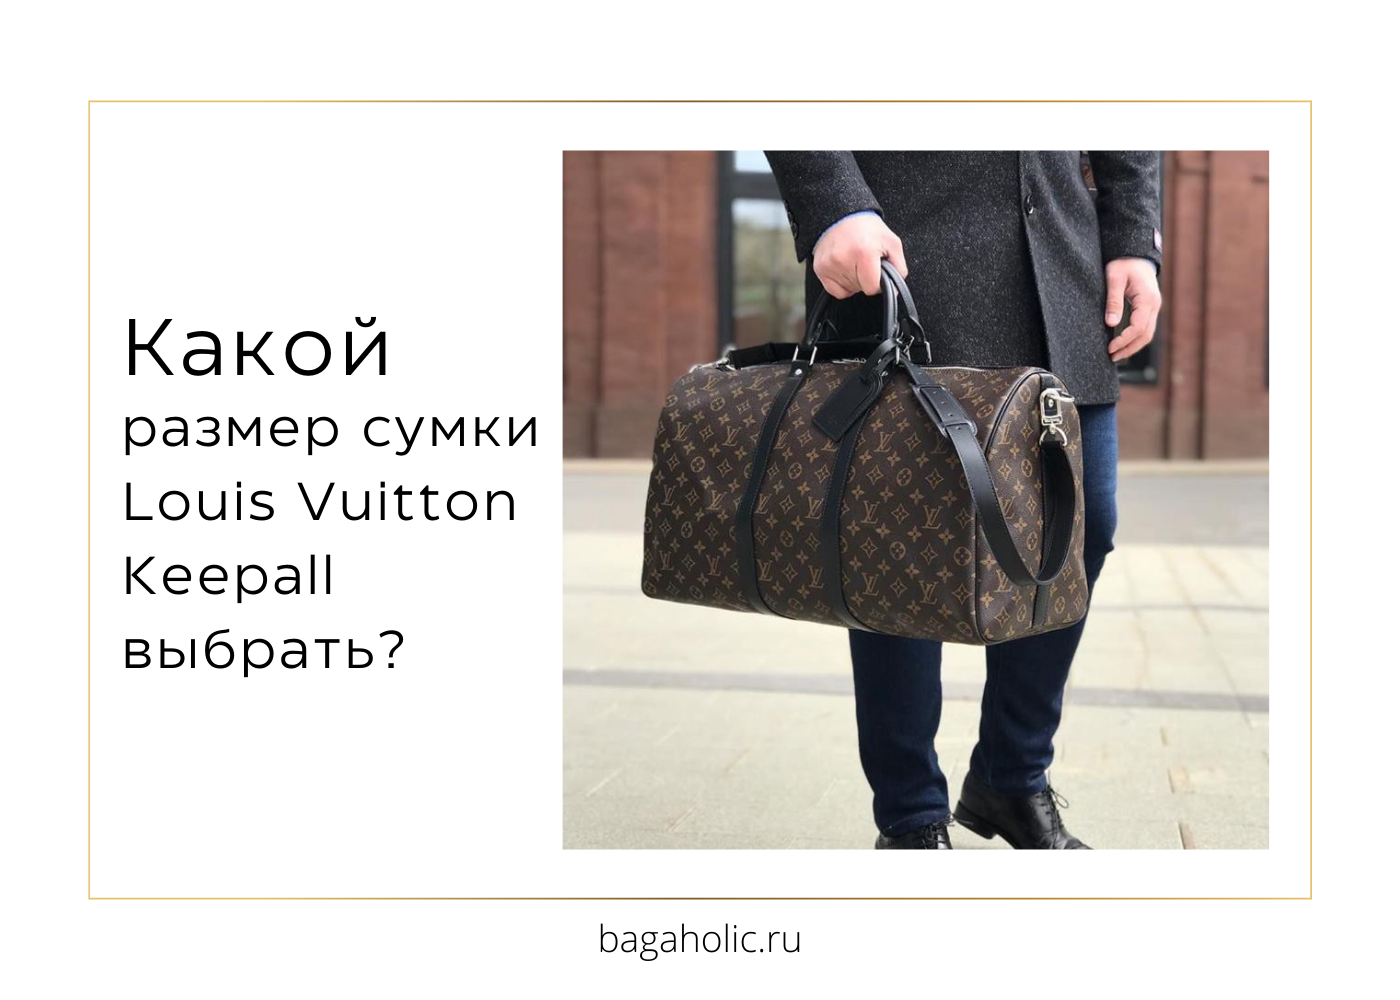 Какой размер сумки Louis Vuitton Keepall выбрать? - Bagaholic